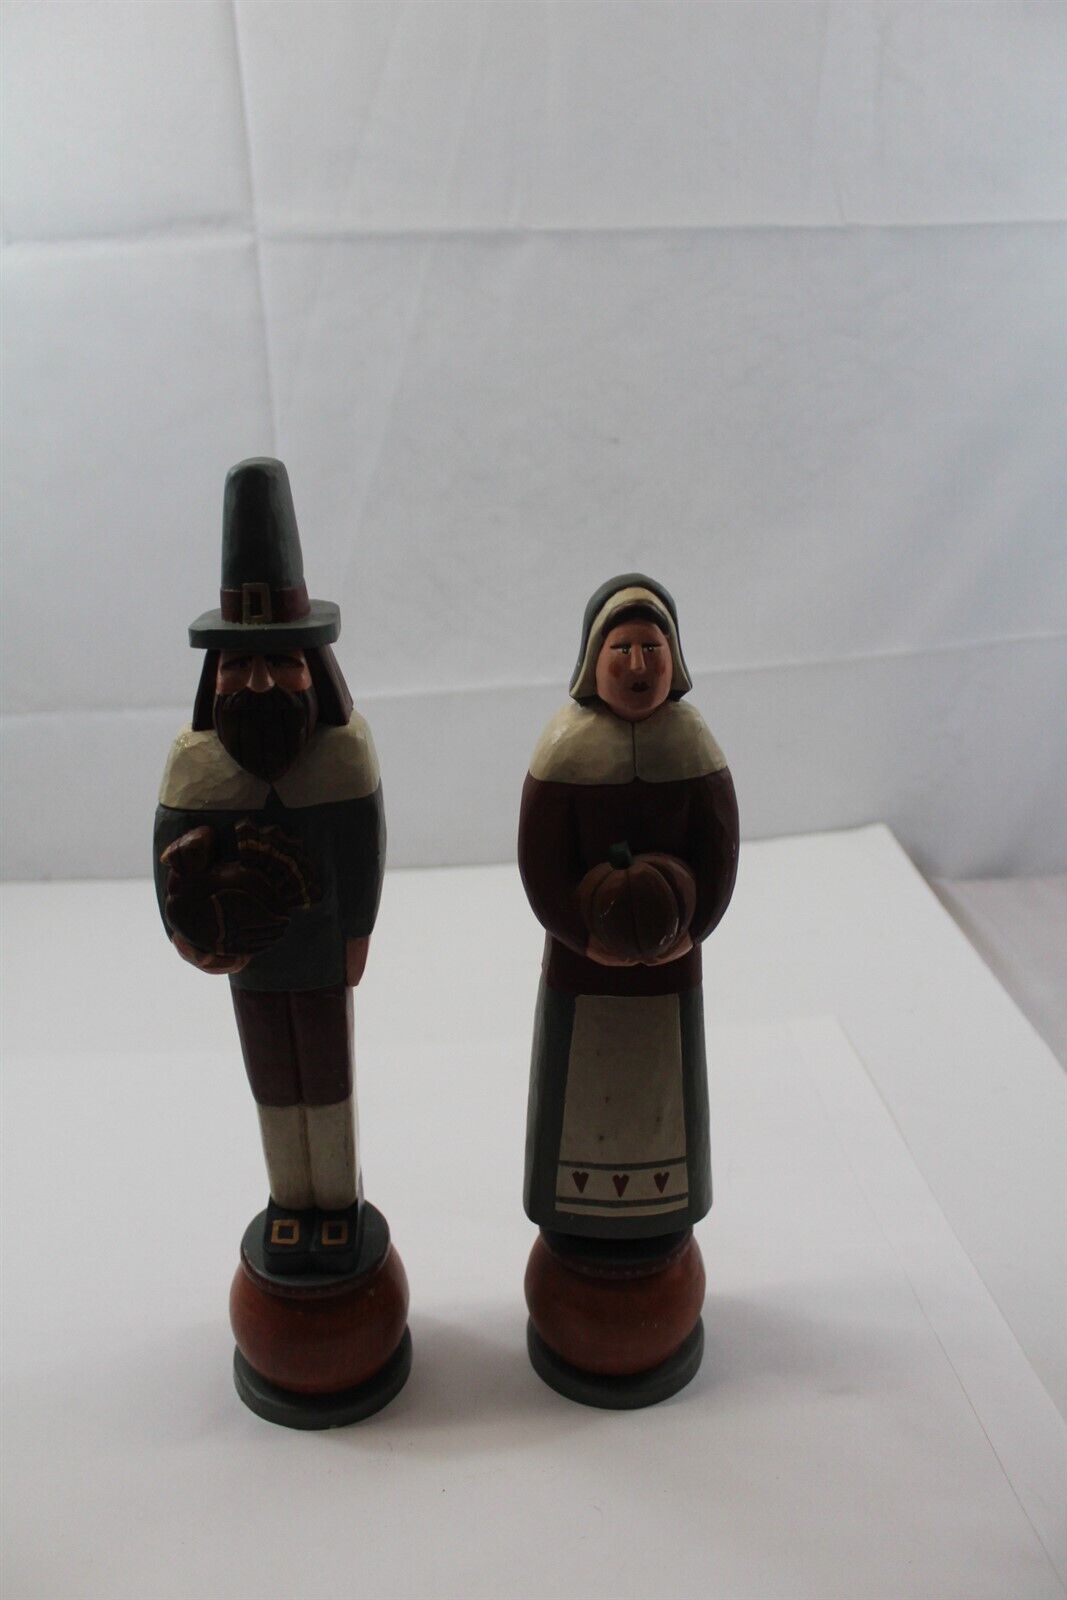  Mr. & Mrs. Pilgrim Figurines Thanksgiving Decoration  Vintage